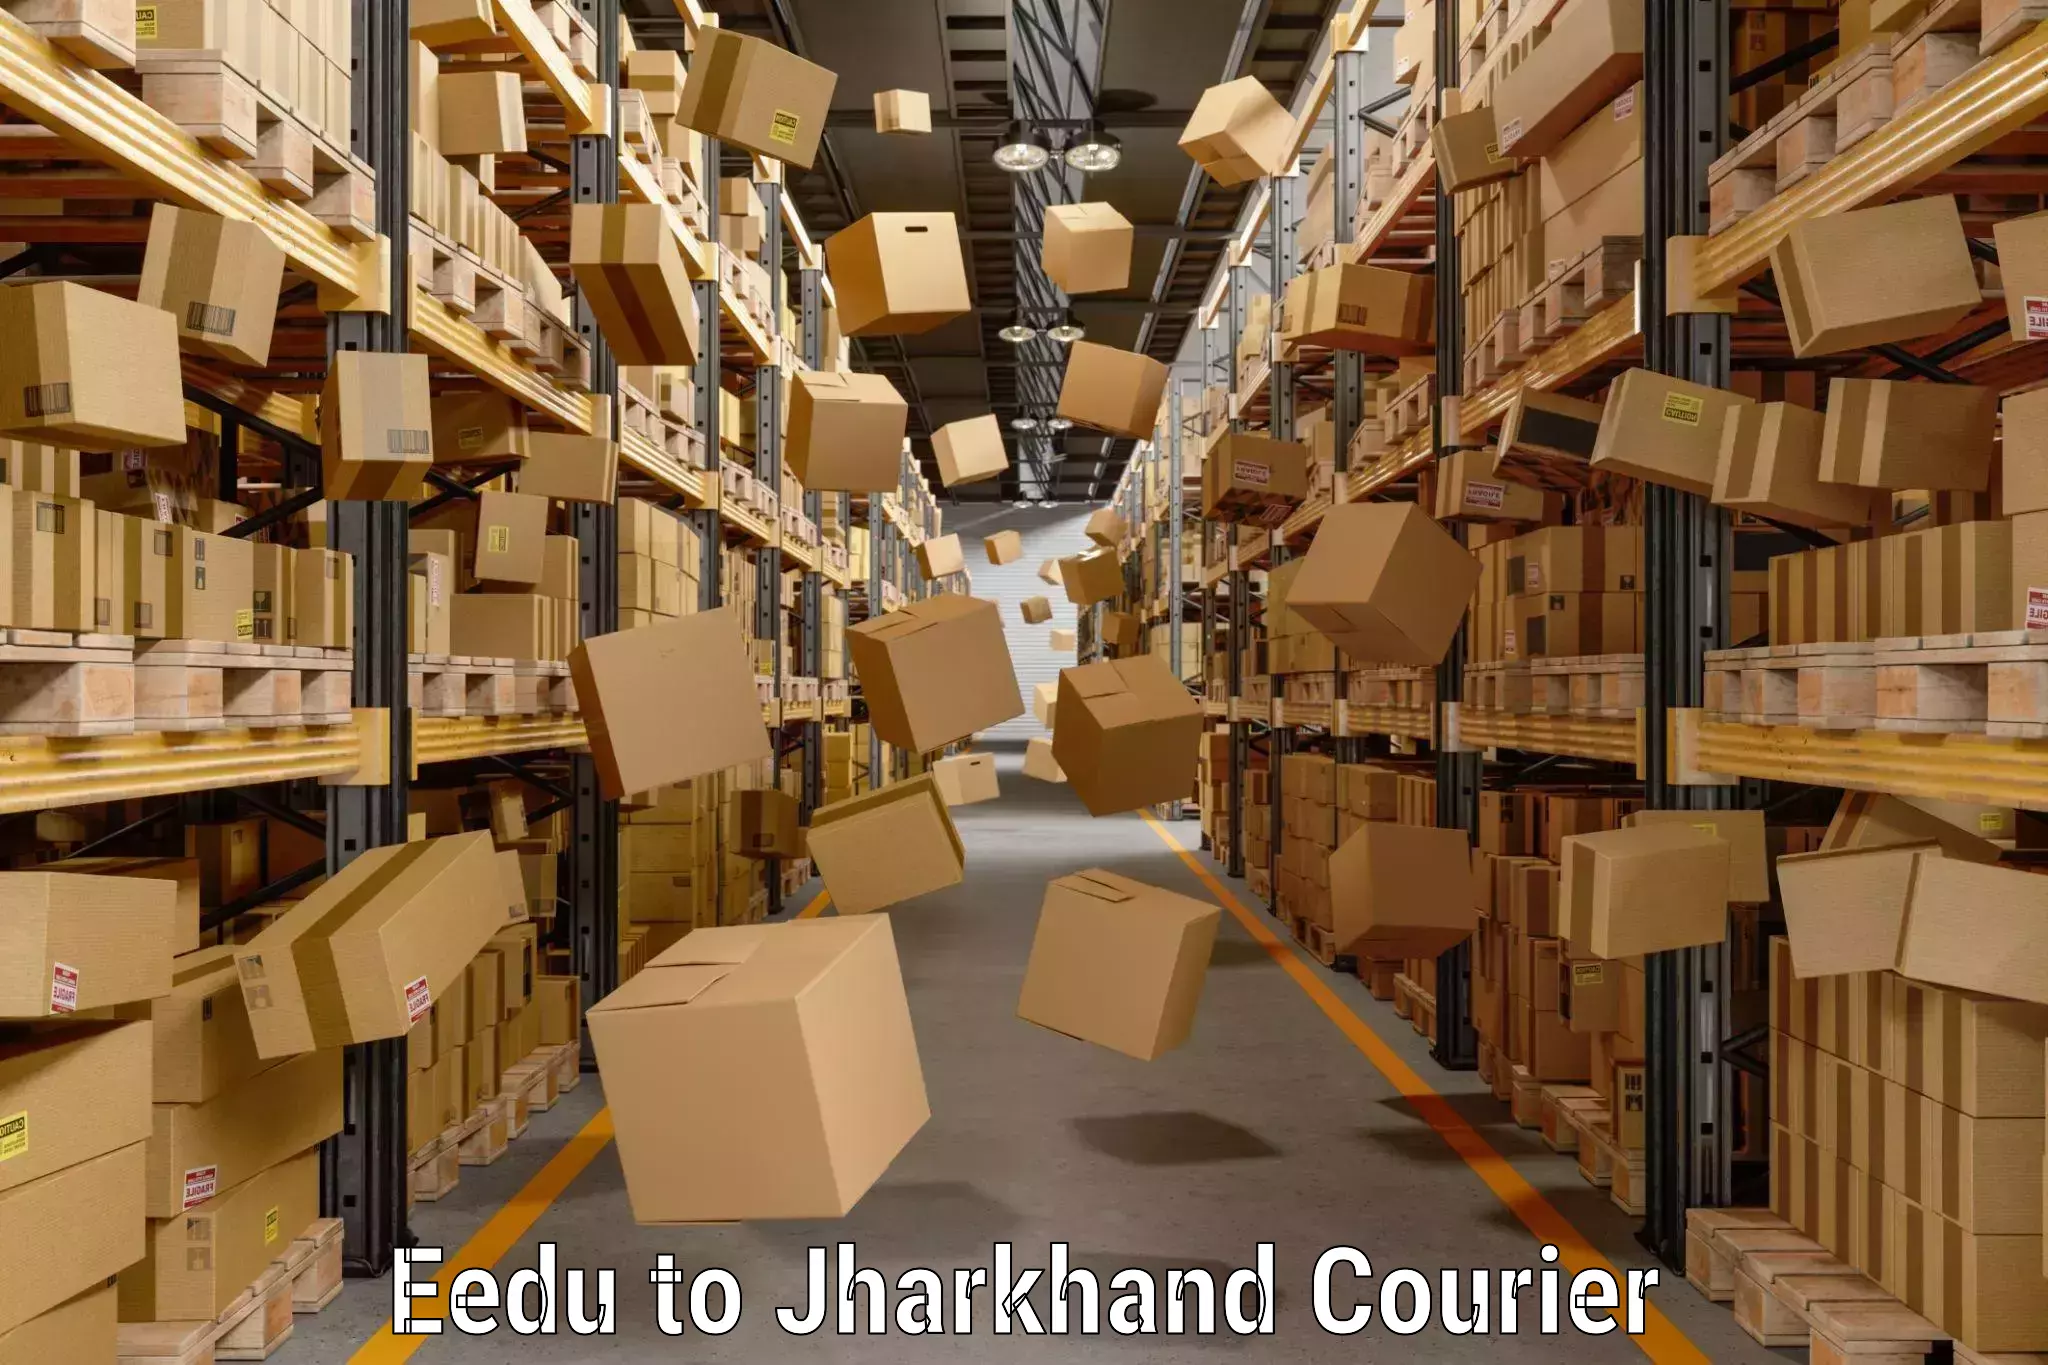 Luggage shipment specialists Eedu to Jharkhand